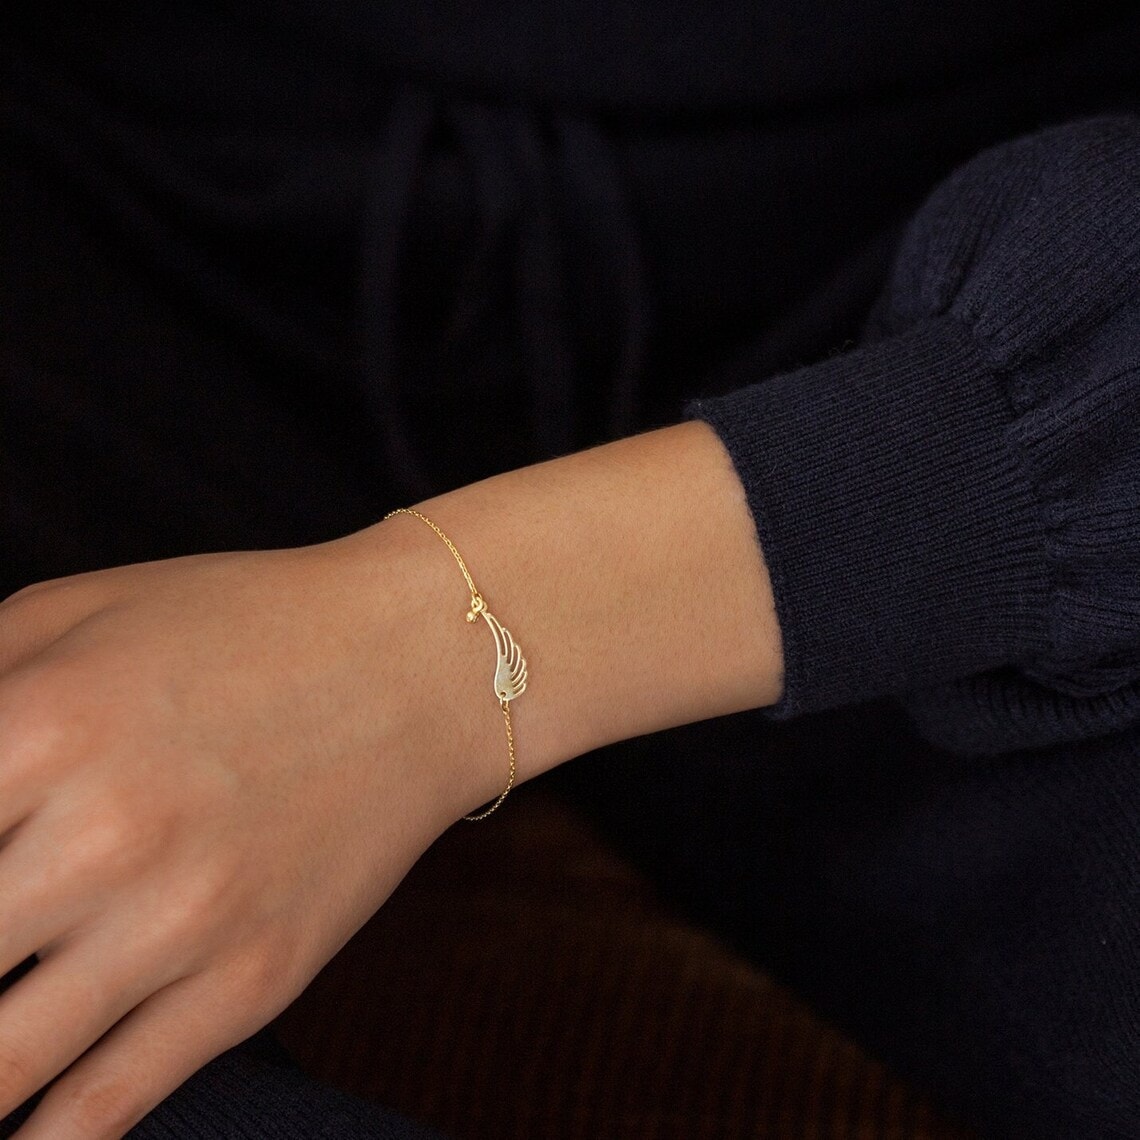 gold angel wing bracelet on the wrist